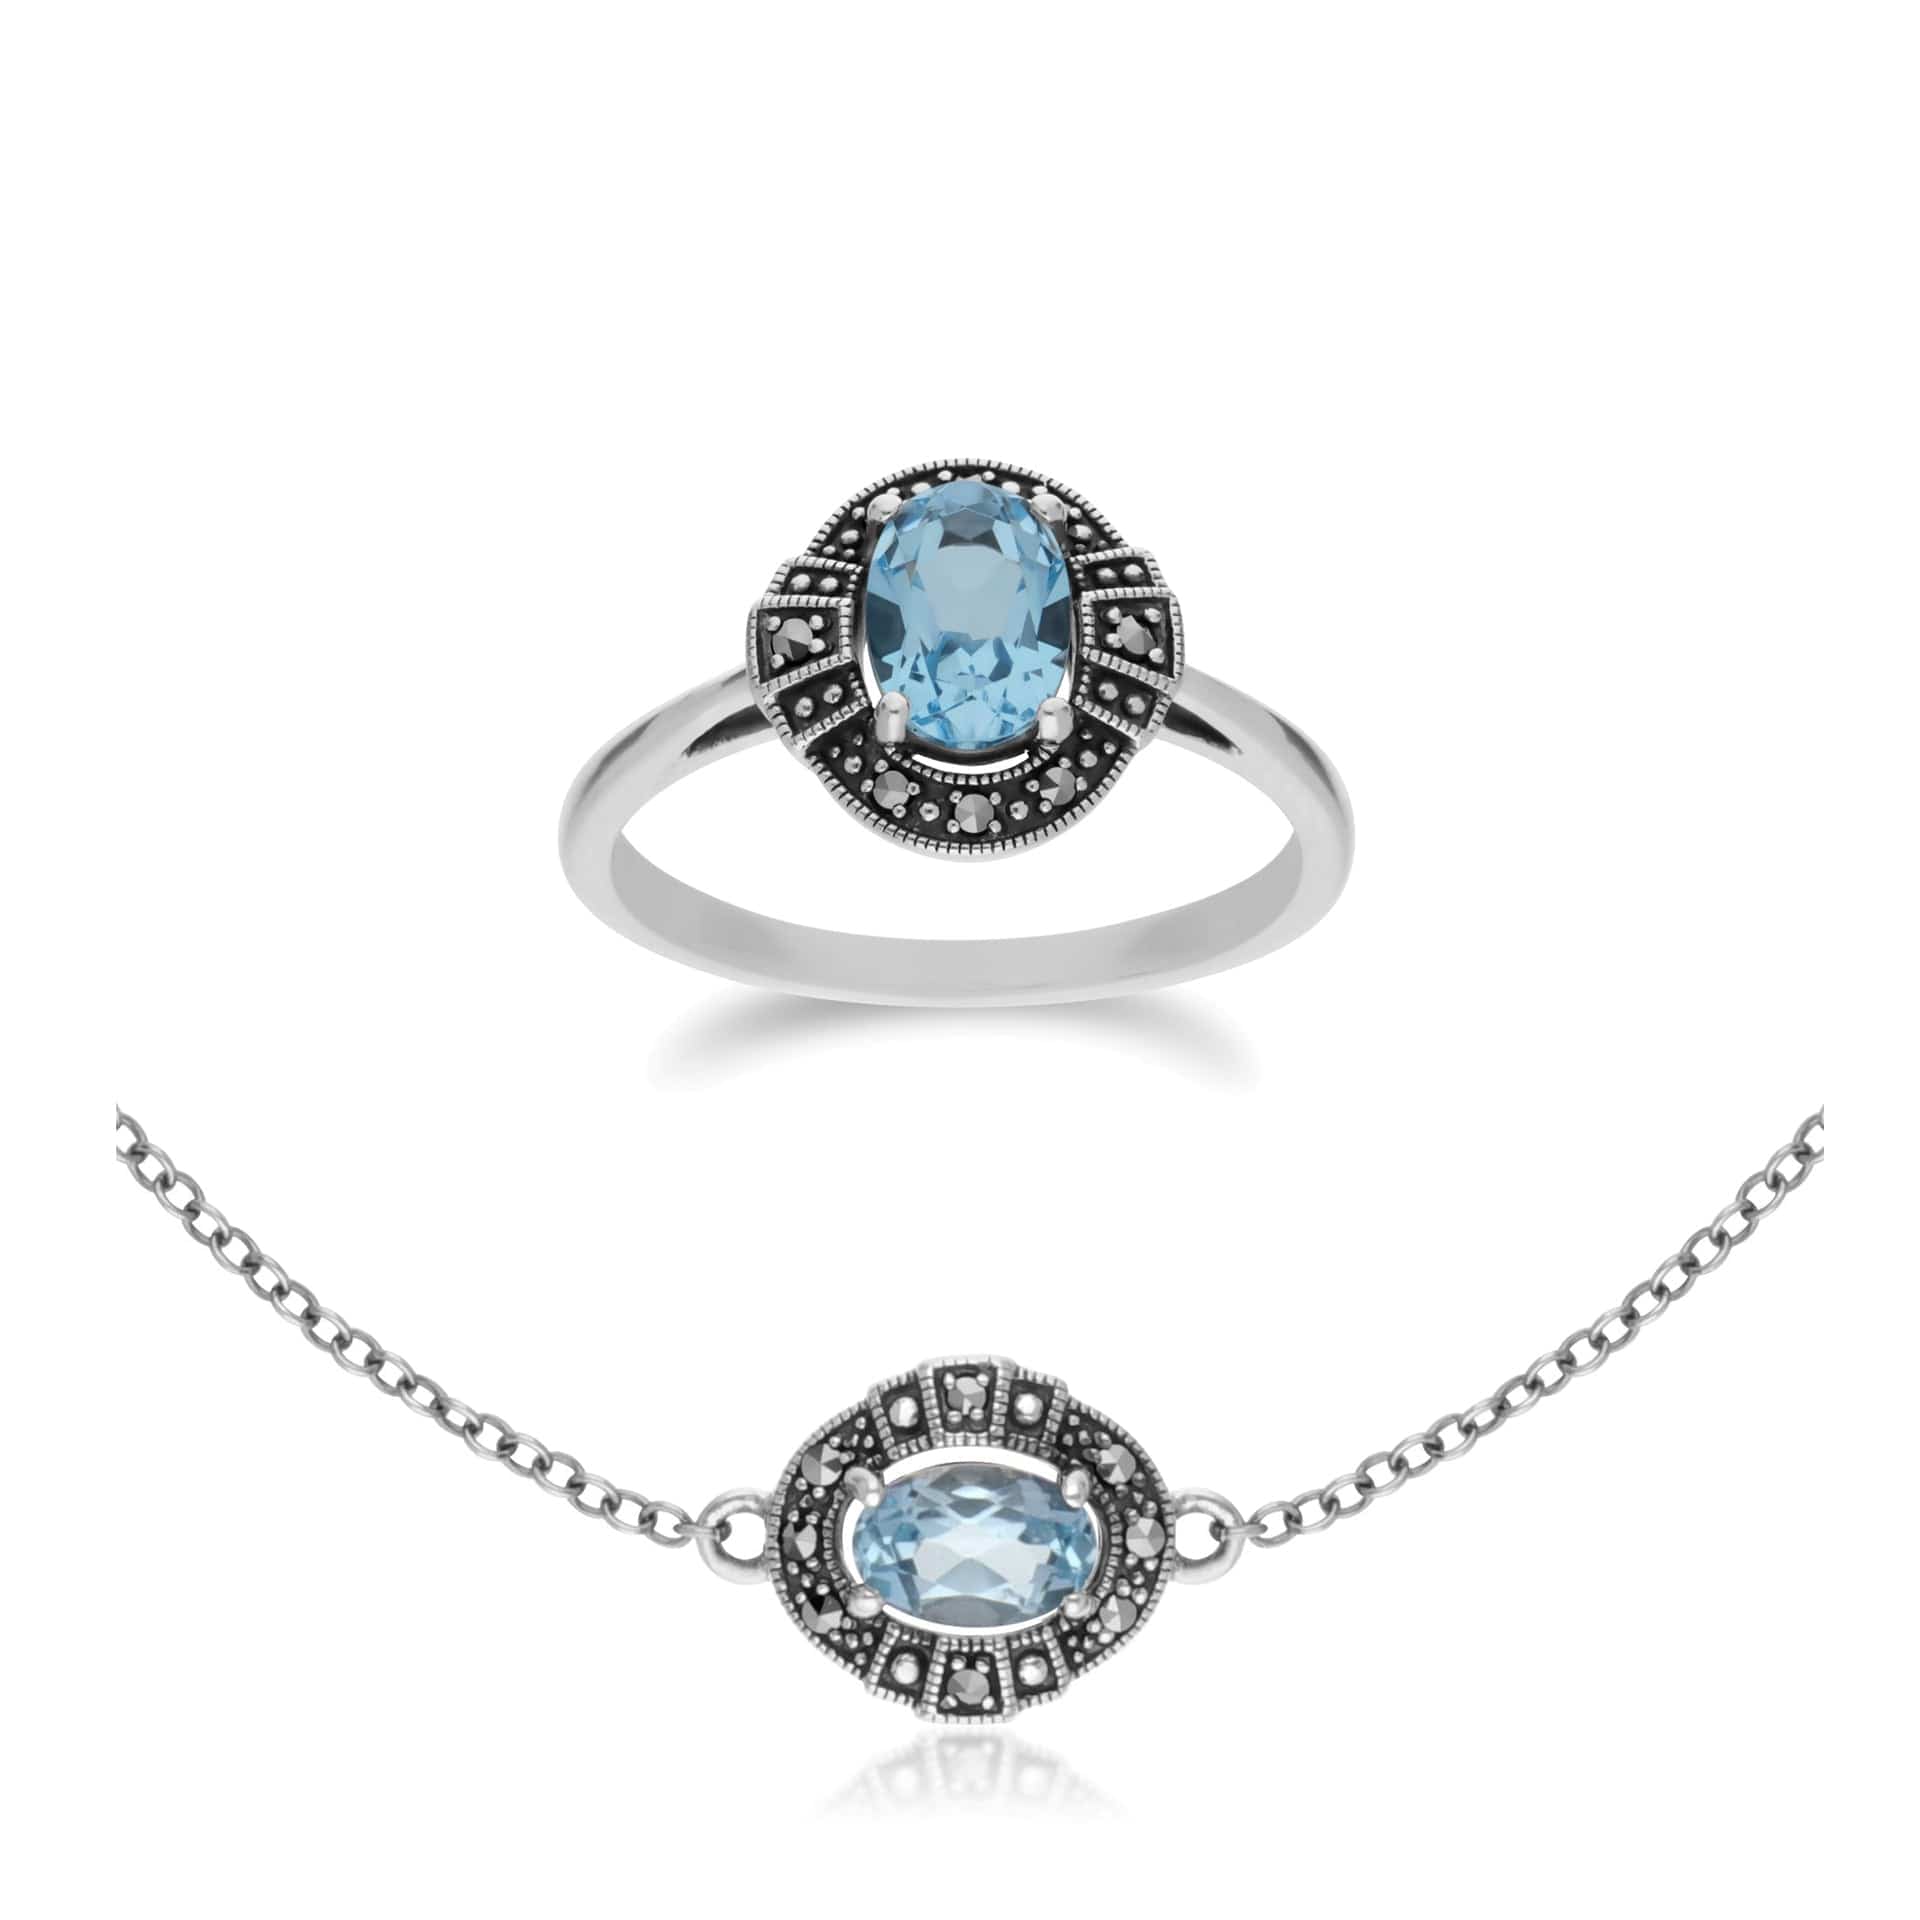 214L165401925-214R605701925 Art Deco Style Oval Blue Topaz and Marcasite Cluster Silver Ring & Bracelet Set 1